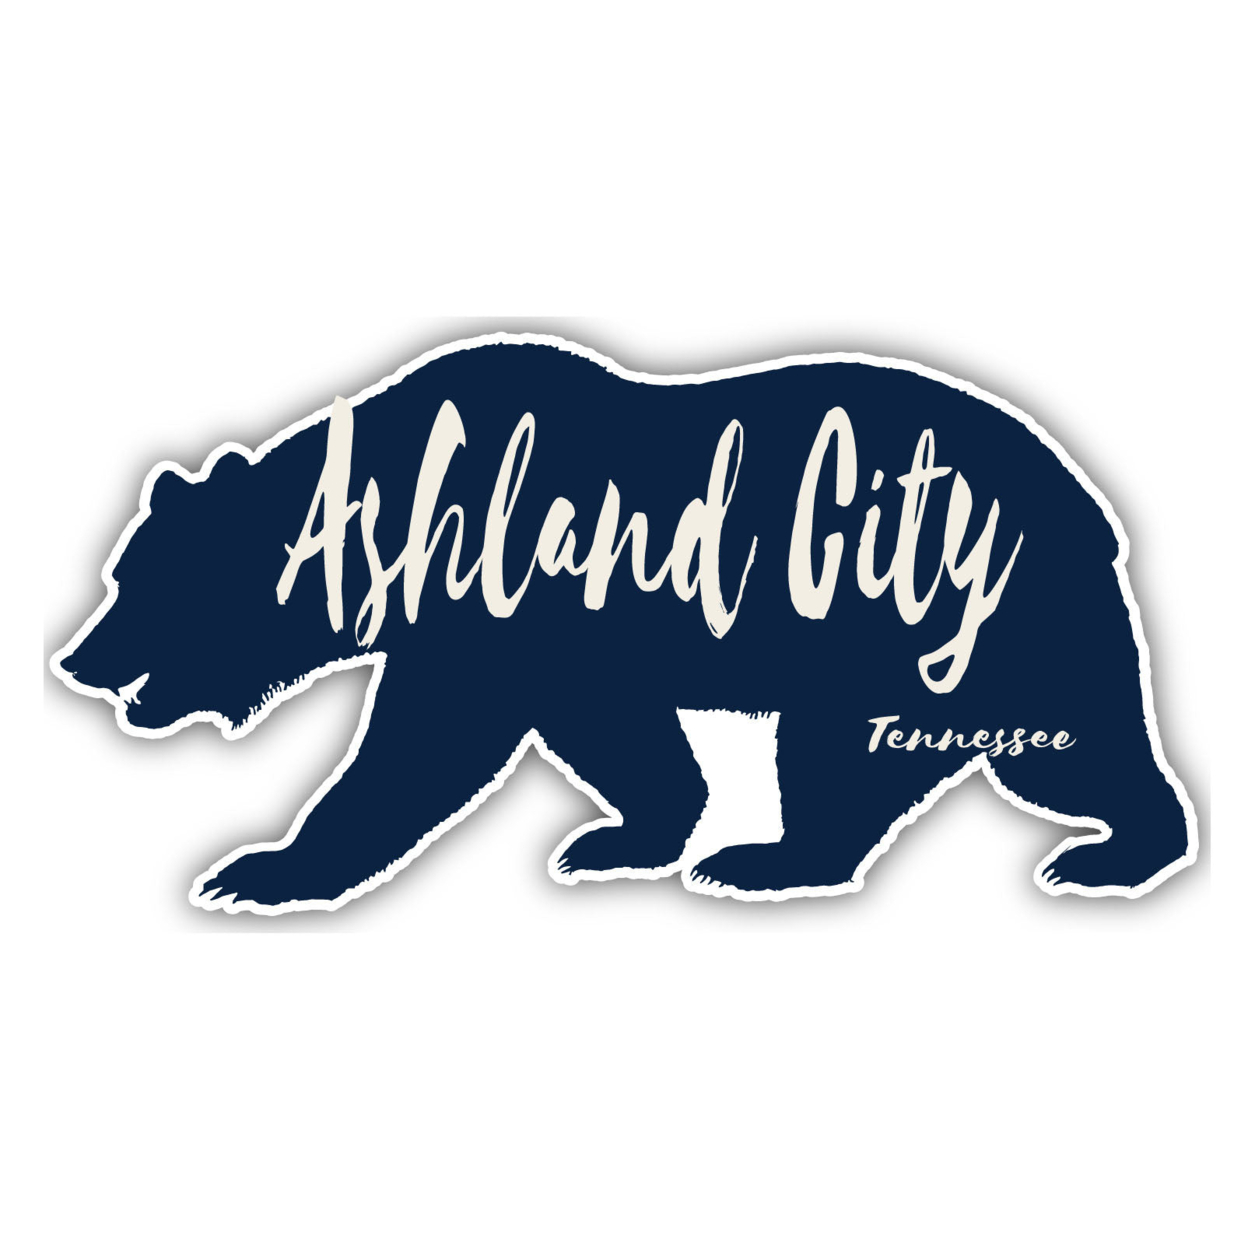 Ashland City Tennessee Souvenir Decorative Stickers (Choose Theme And Size) - Single Unit, 10-Inch, Bear